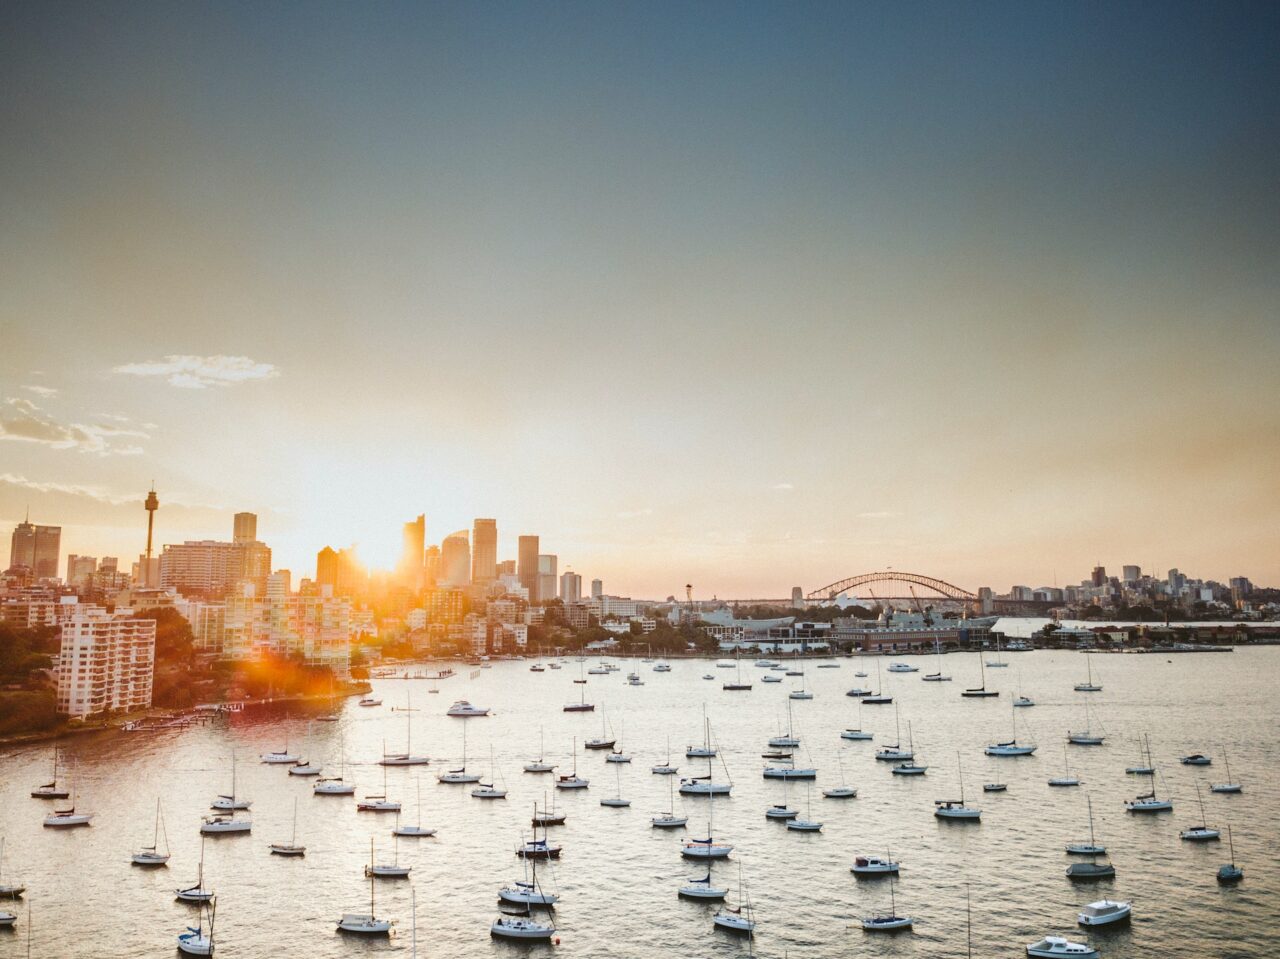 Sydney Harbor at sunset